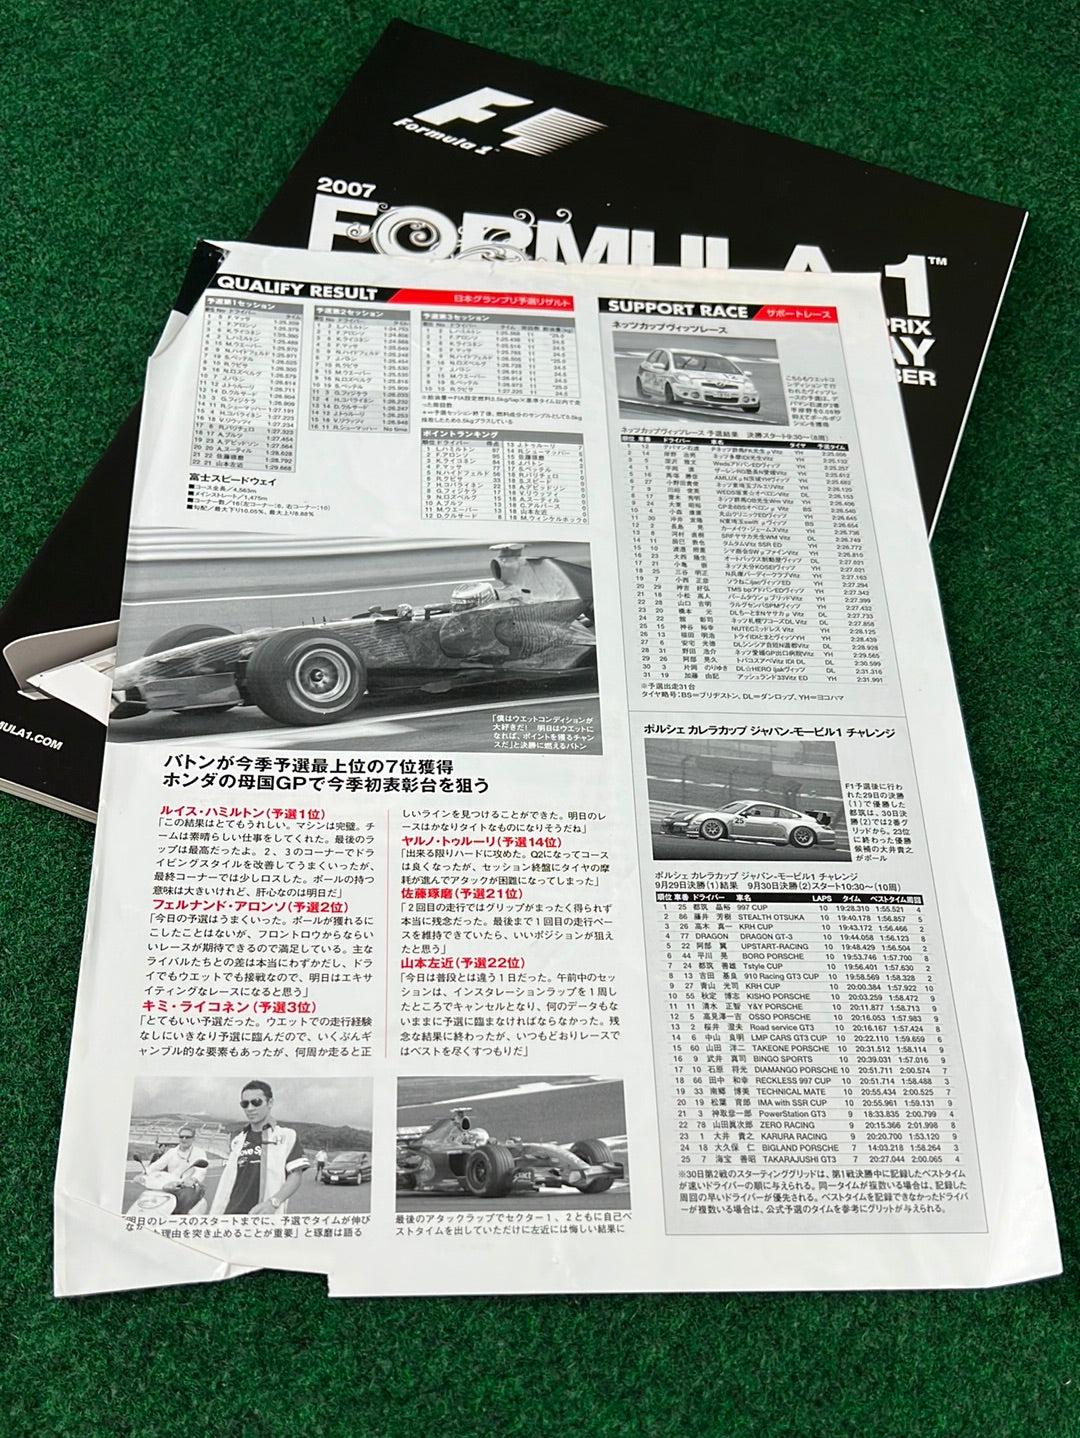 F1 - Fuji Television Japanese Grand Prix 2007 at Fuji Speedway Race Program